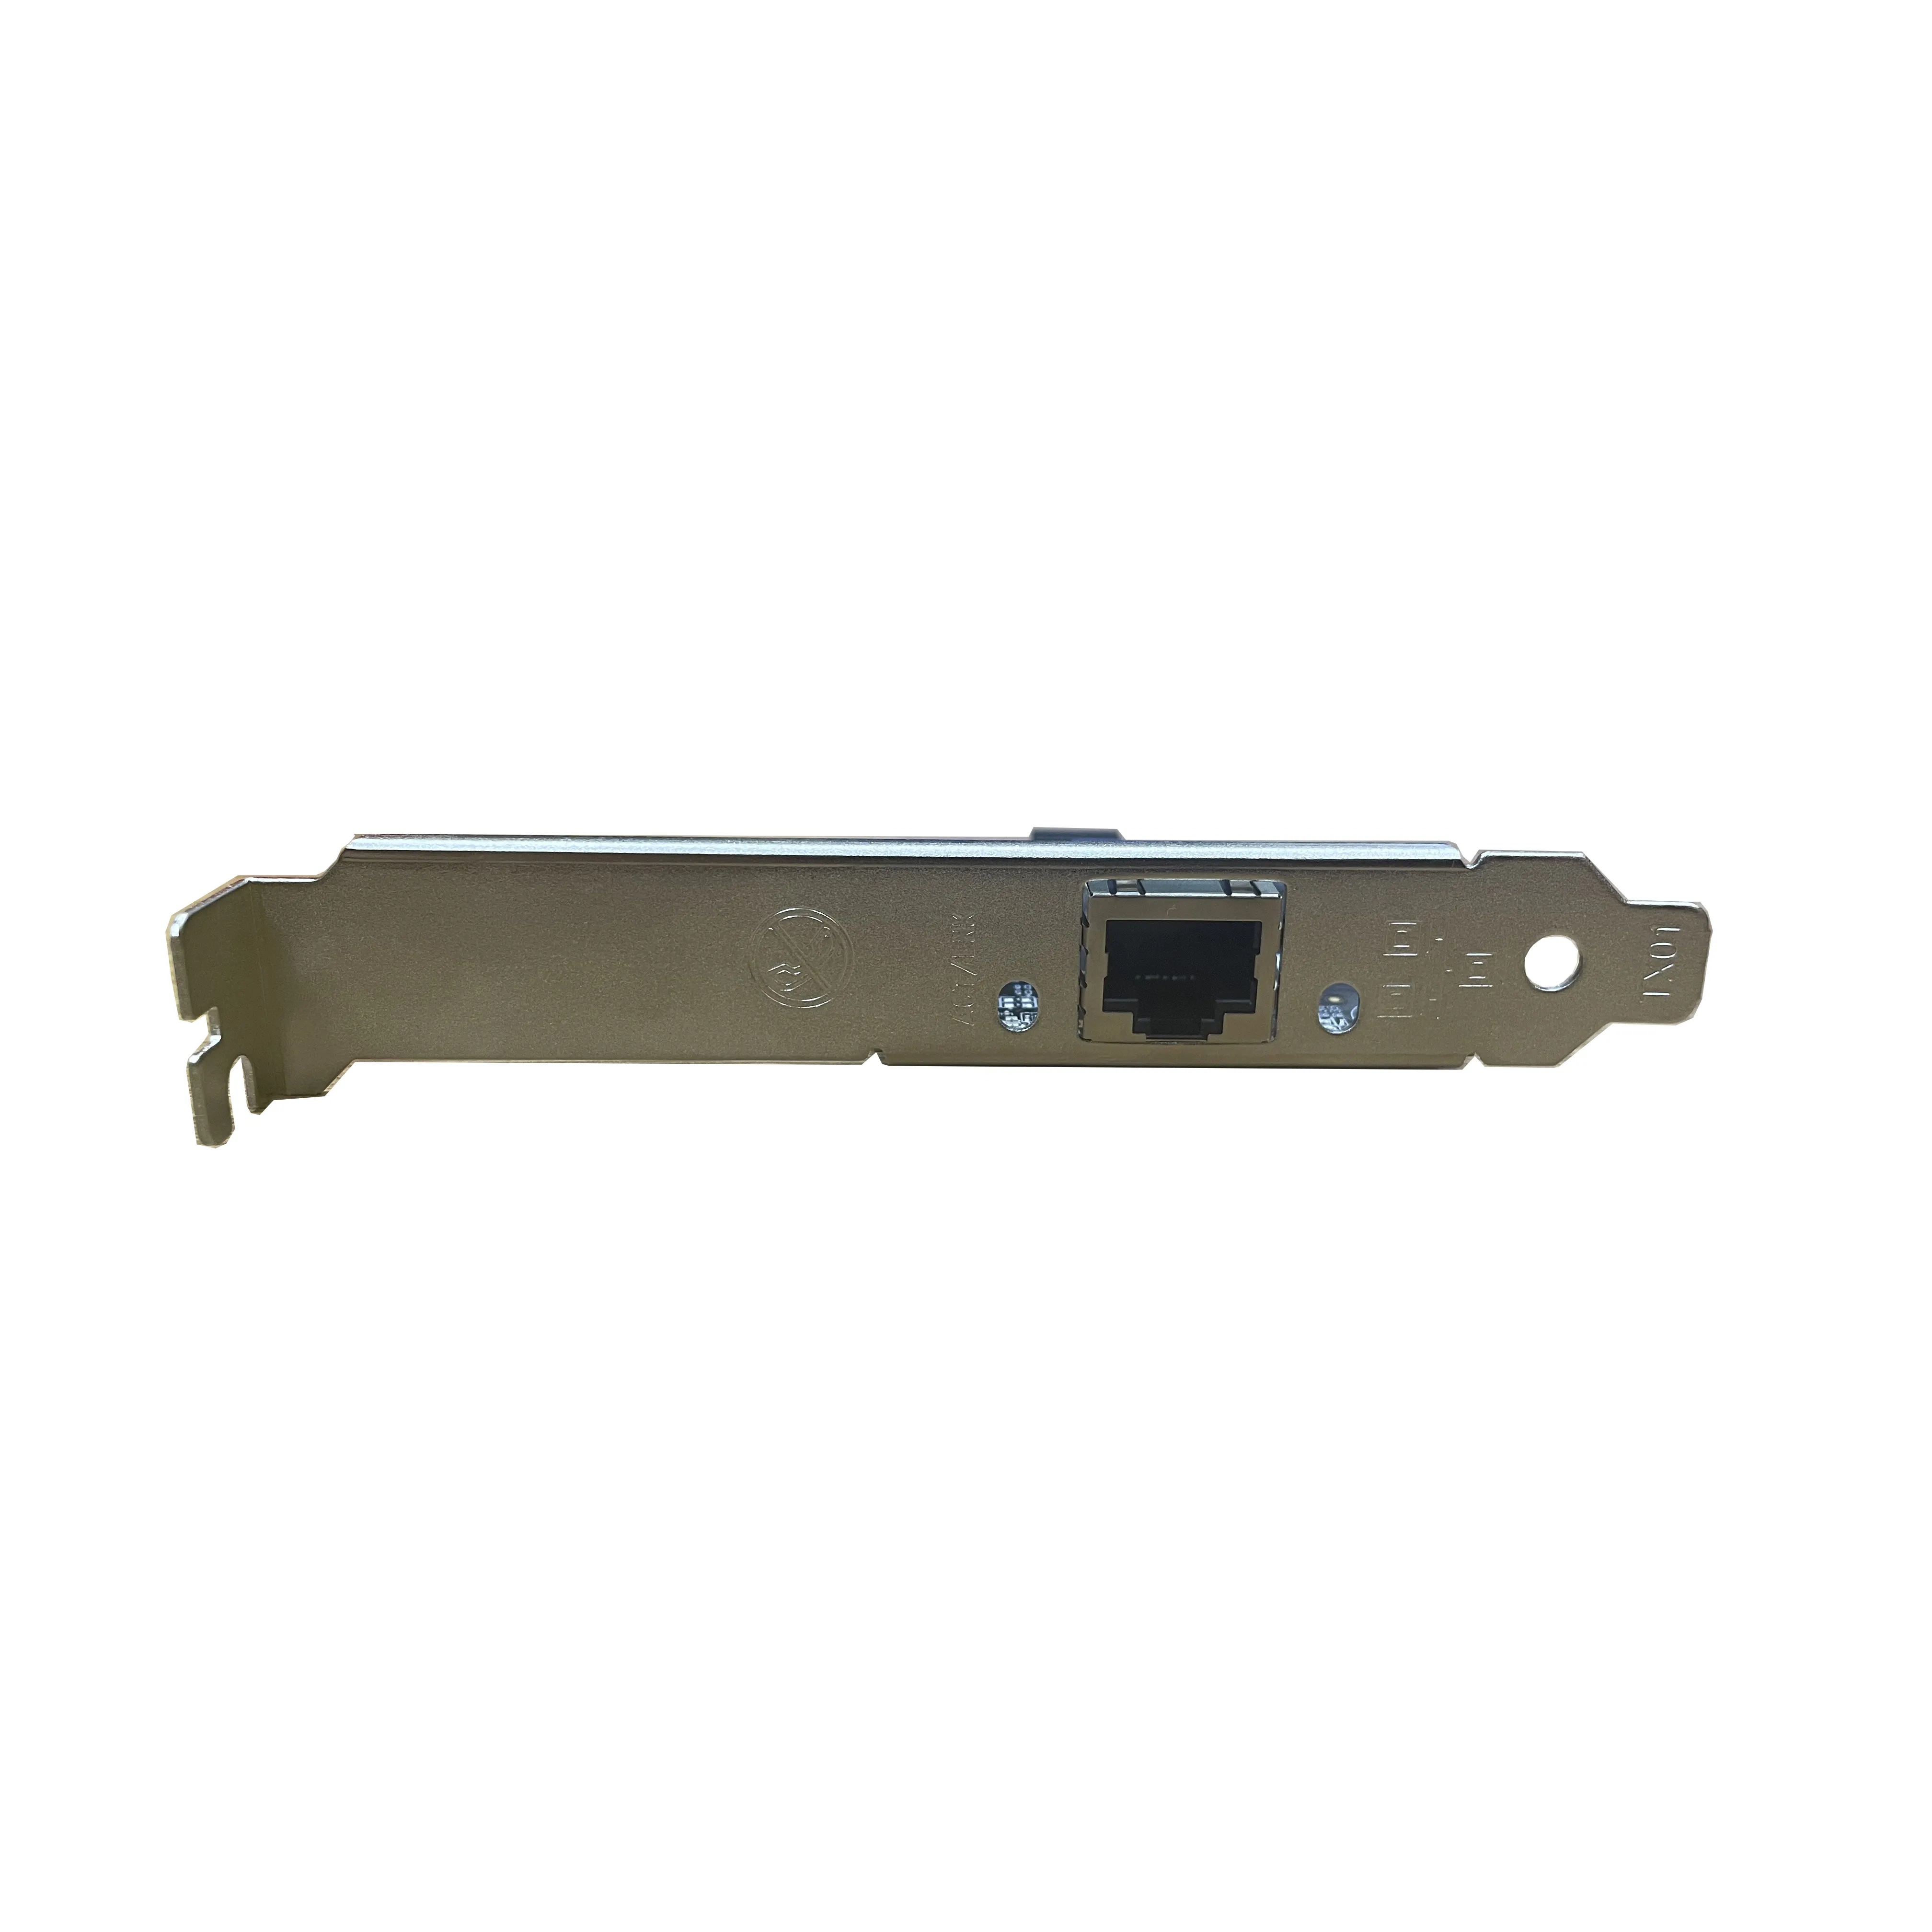 RTL8126 Chipset 5 Gigabit Ethernet PCI Express Network Interface Card 10/100/1000/2500/5000 Mbps RJ45 Lan Adapter Internal Wired